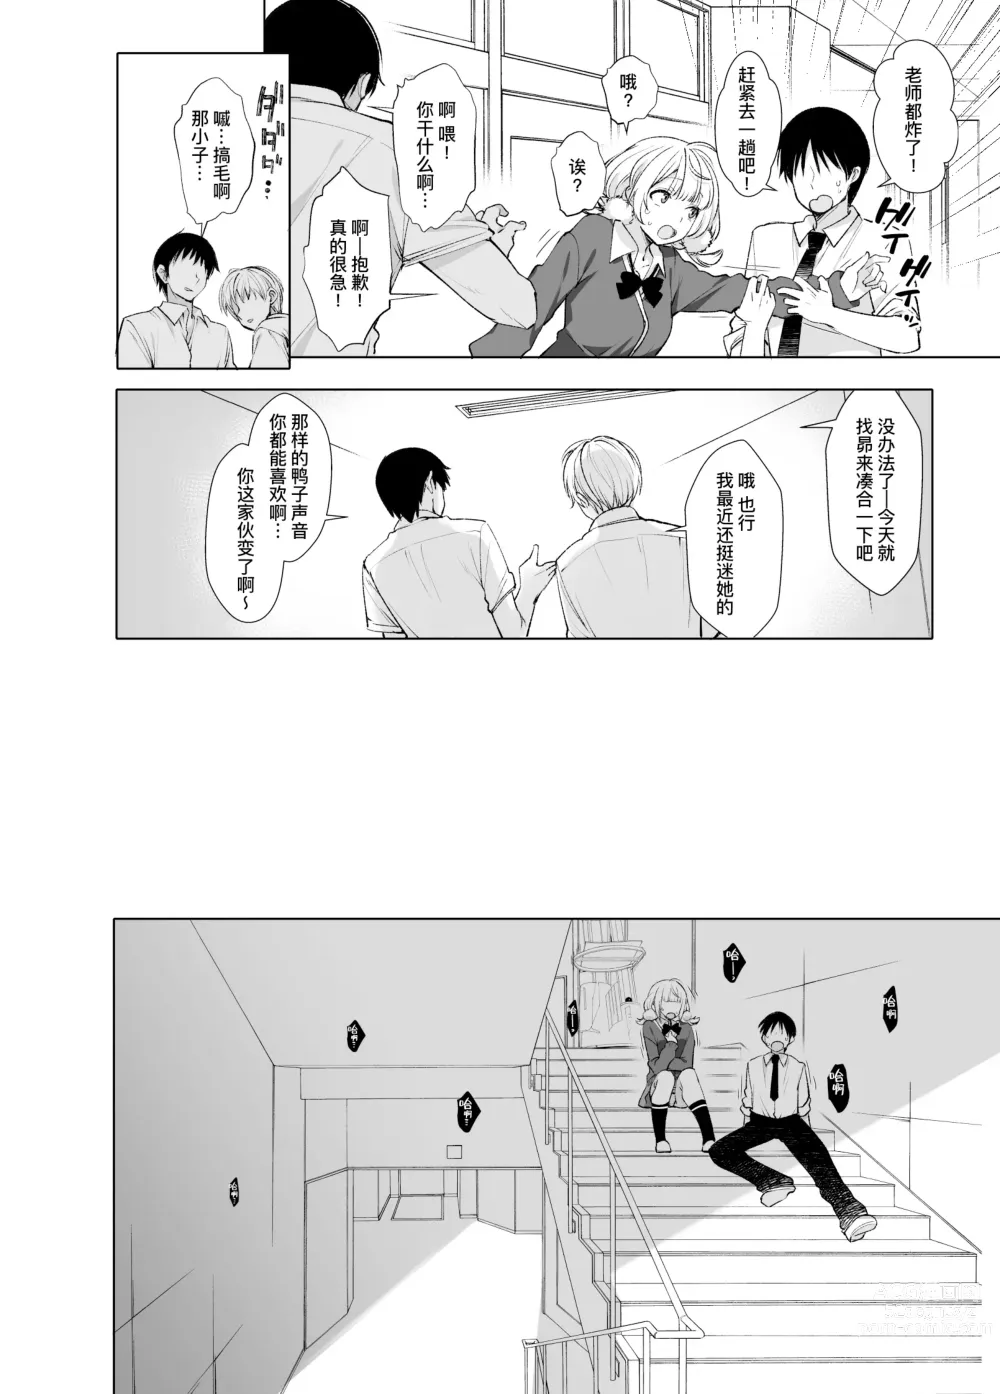 Page 11 of doujinshi 晴天、偶有细雨